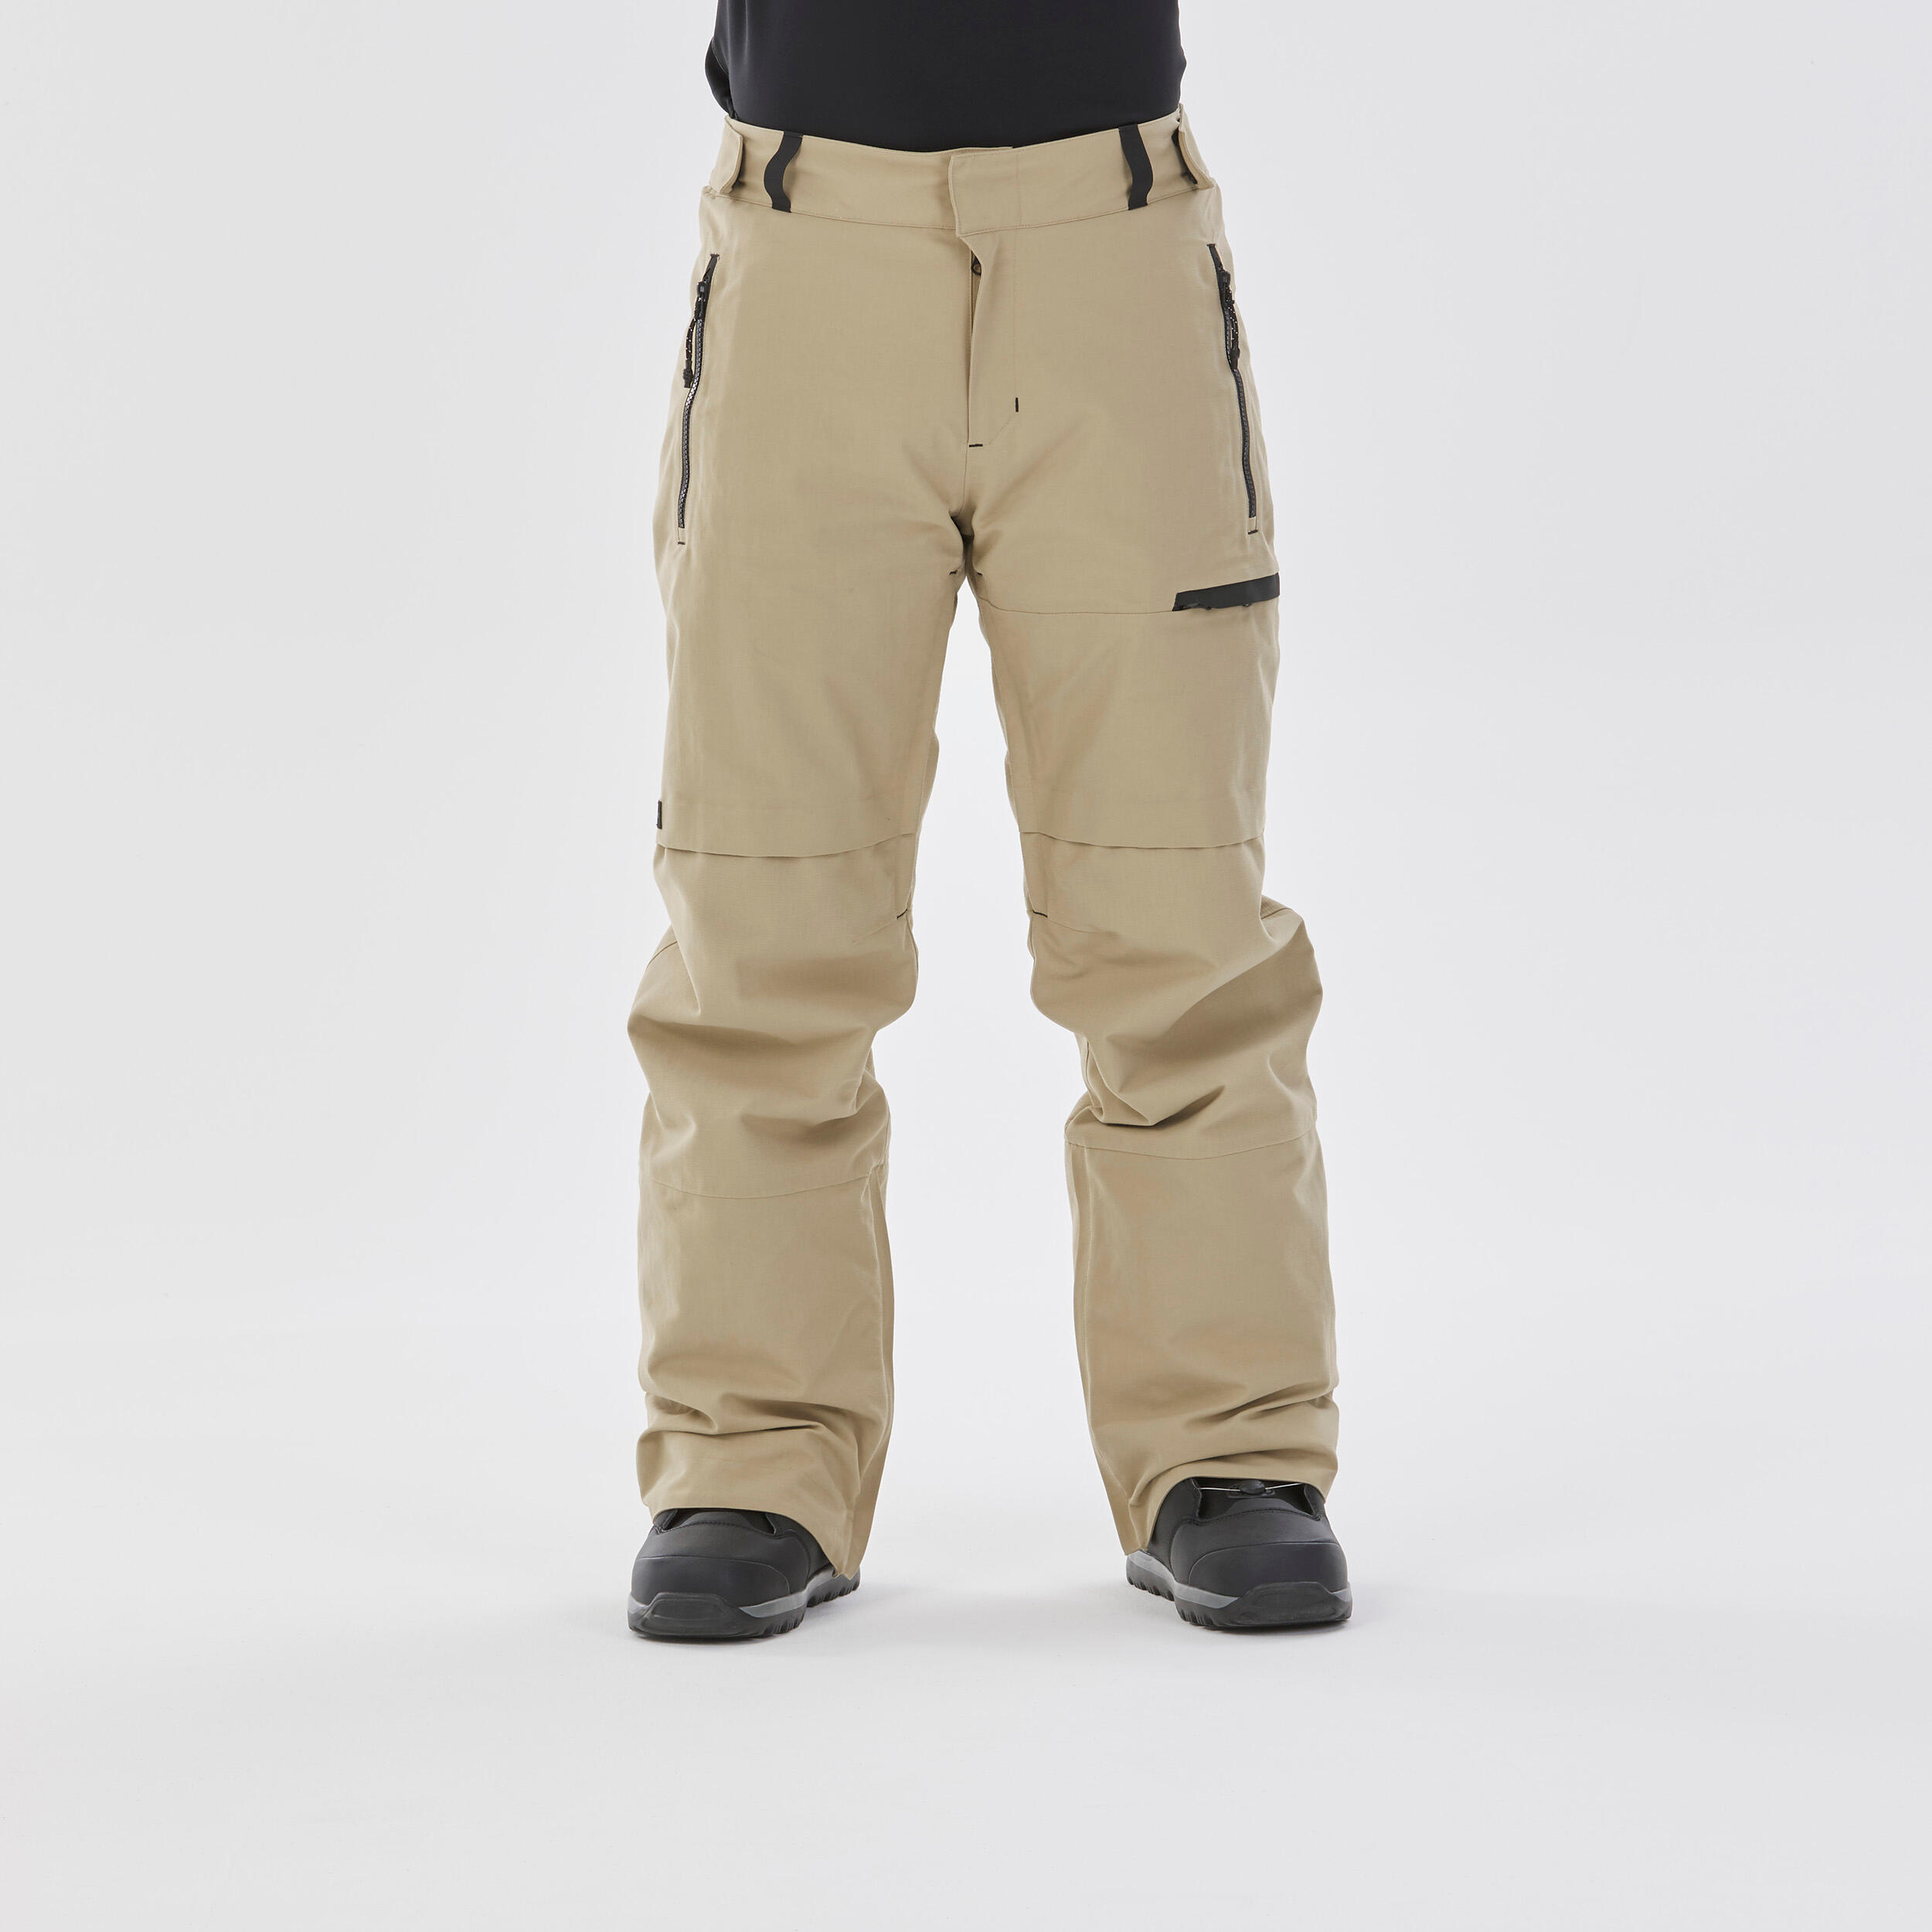 Pantalon Impermeabil Snowboard SNB500 Bej Bărbați BARBATI  Imbracaminte schi